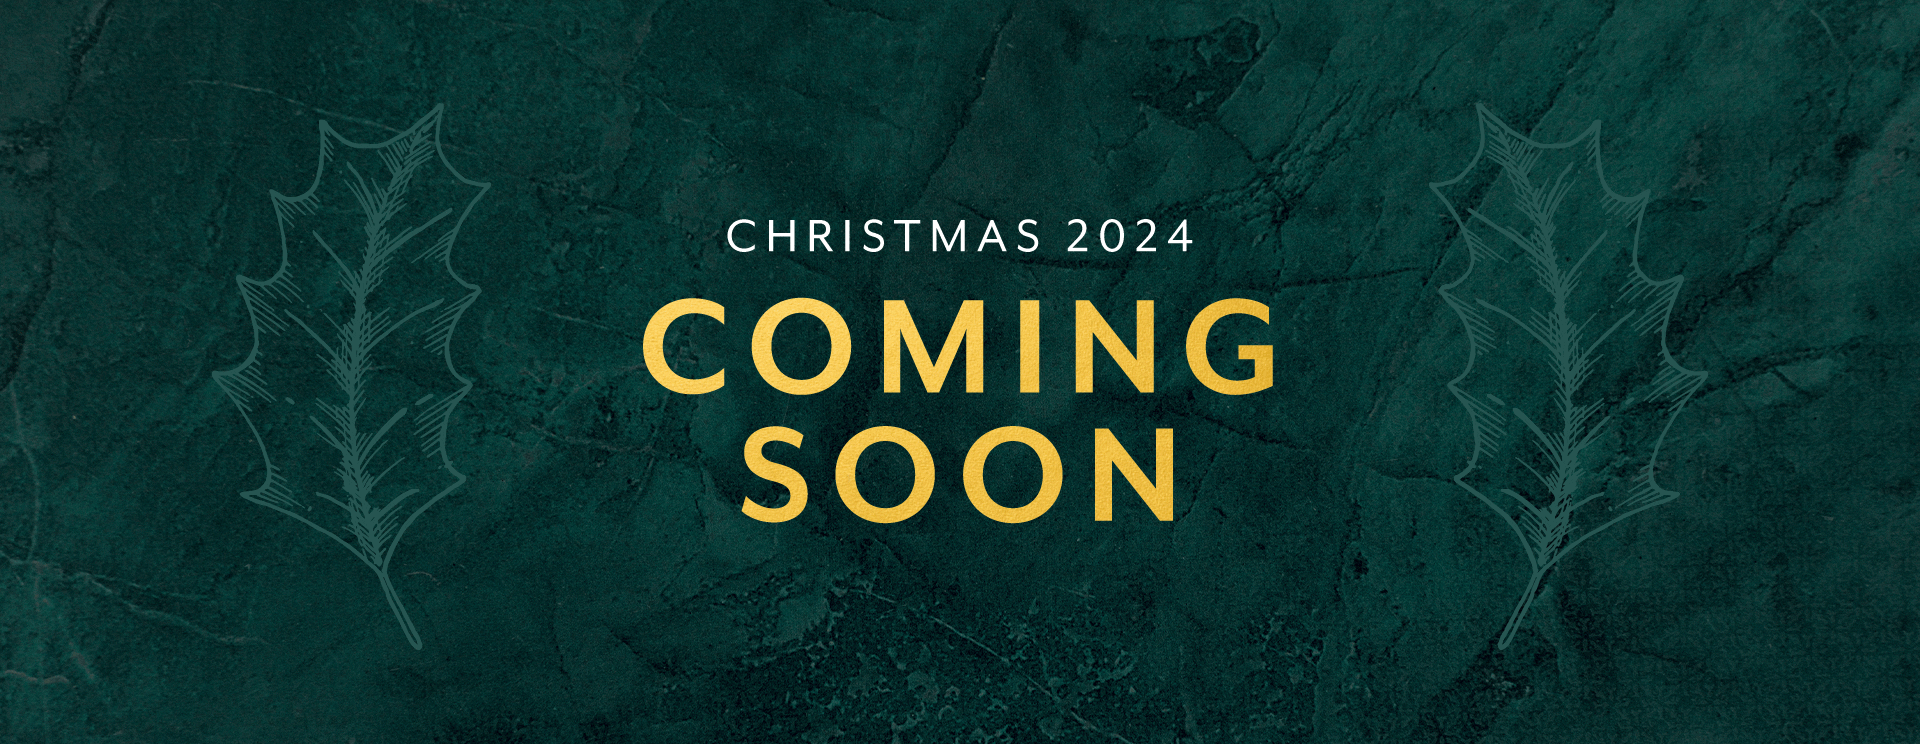 Christmas 2024 at Gerrards Cross